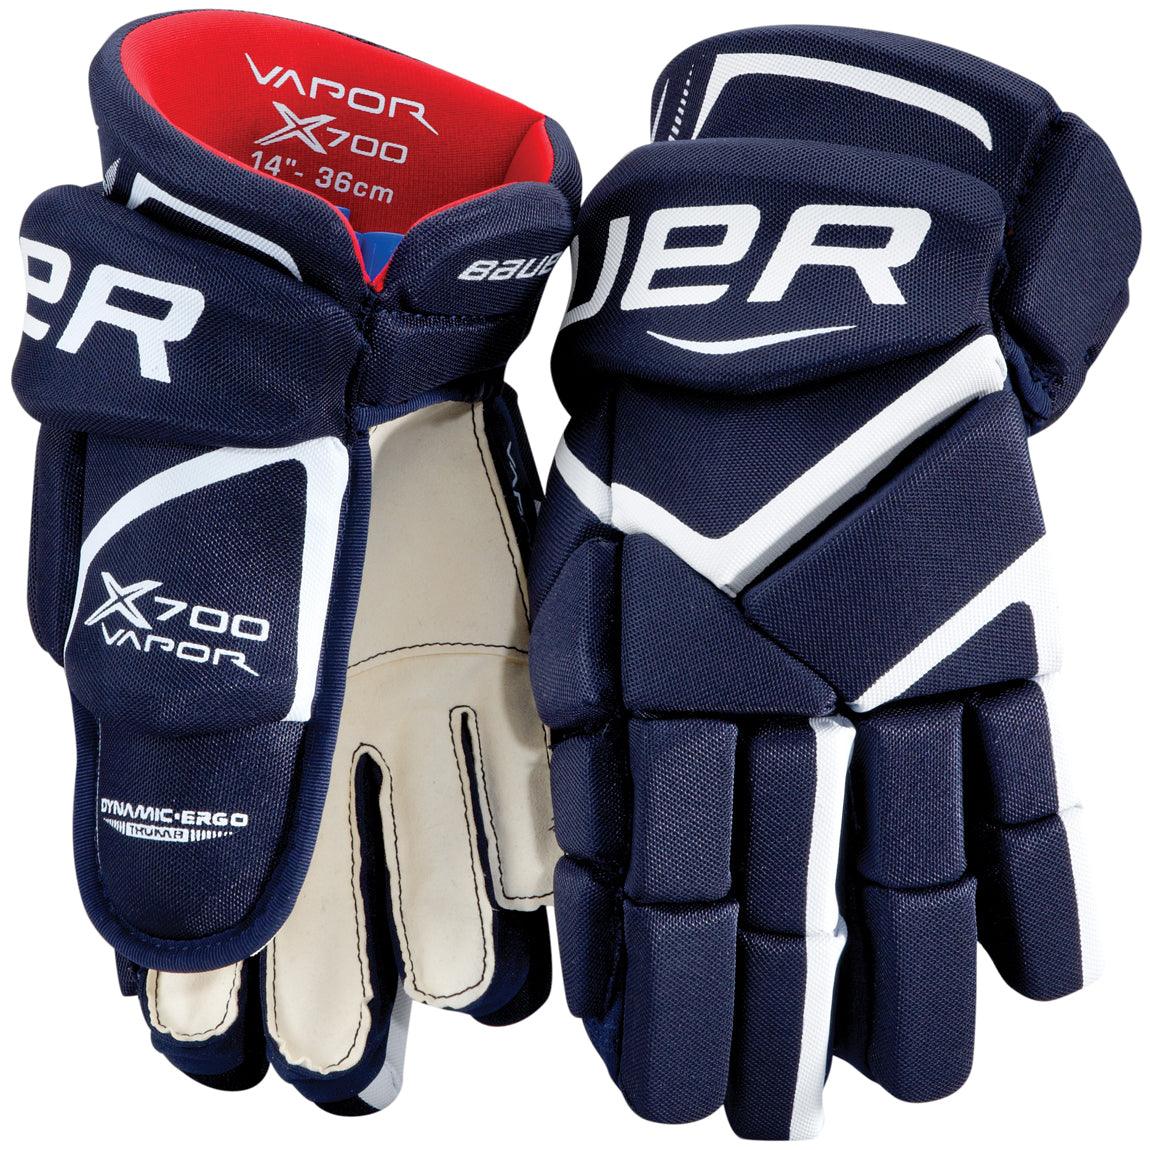 Vapor X700 Gloves - Junior - Sports Excellence